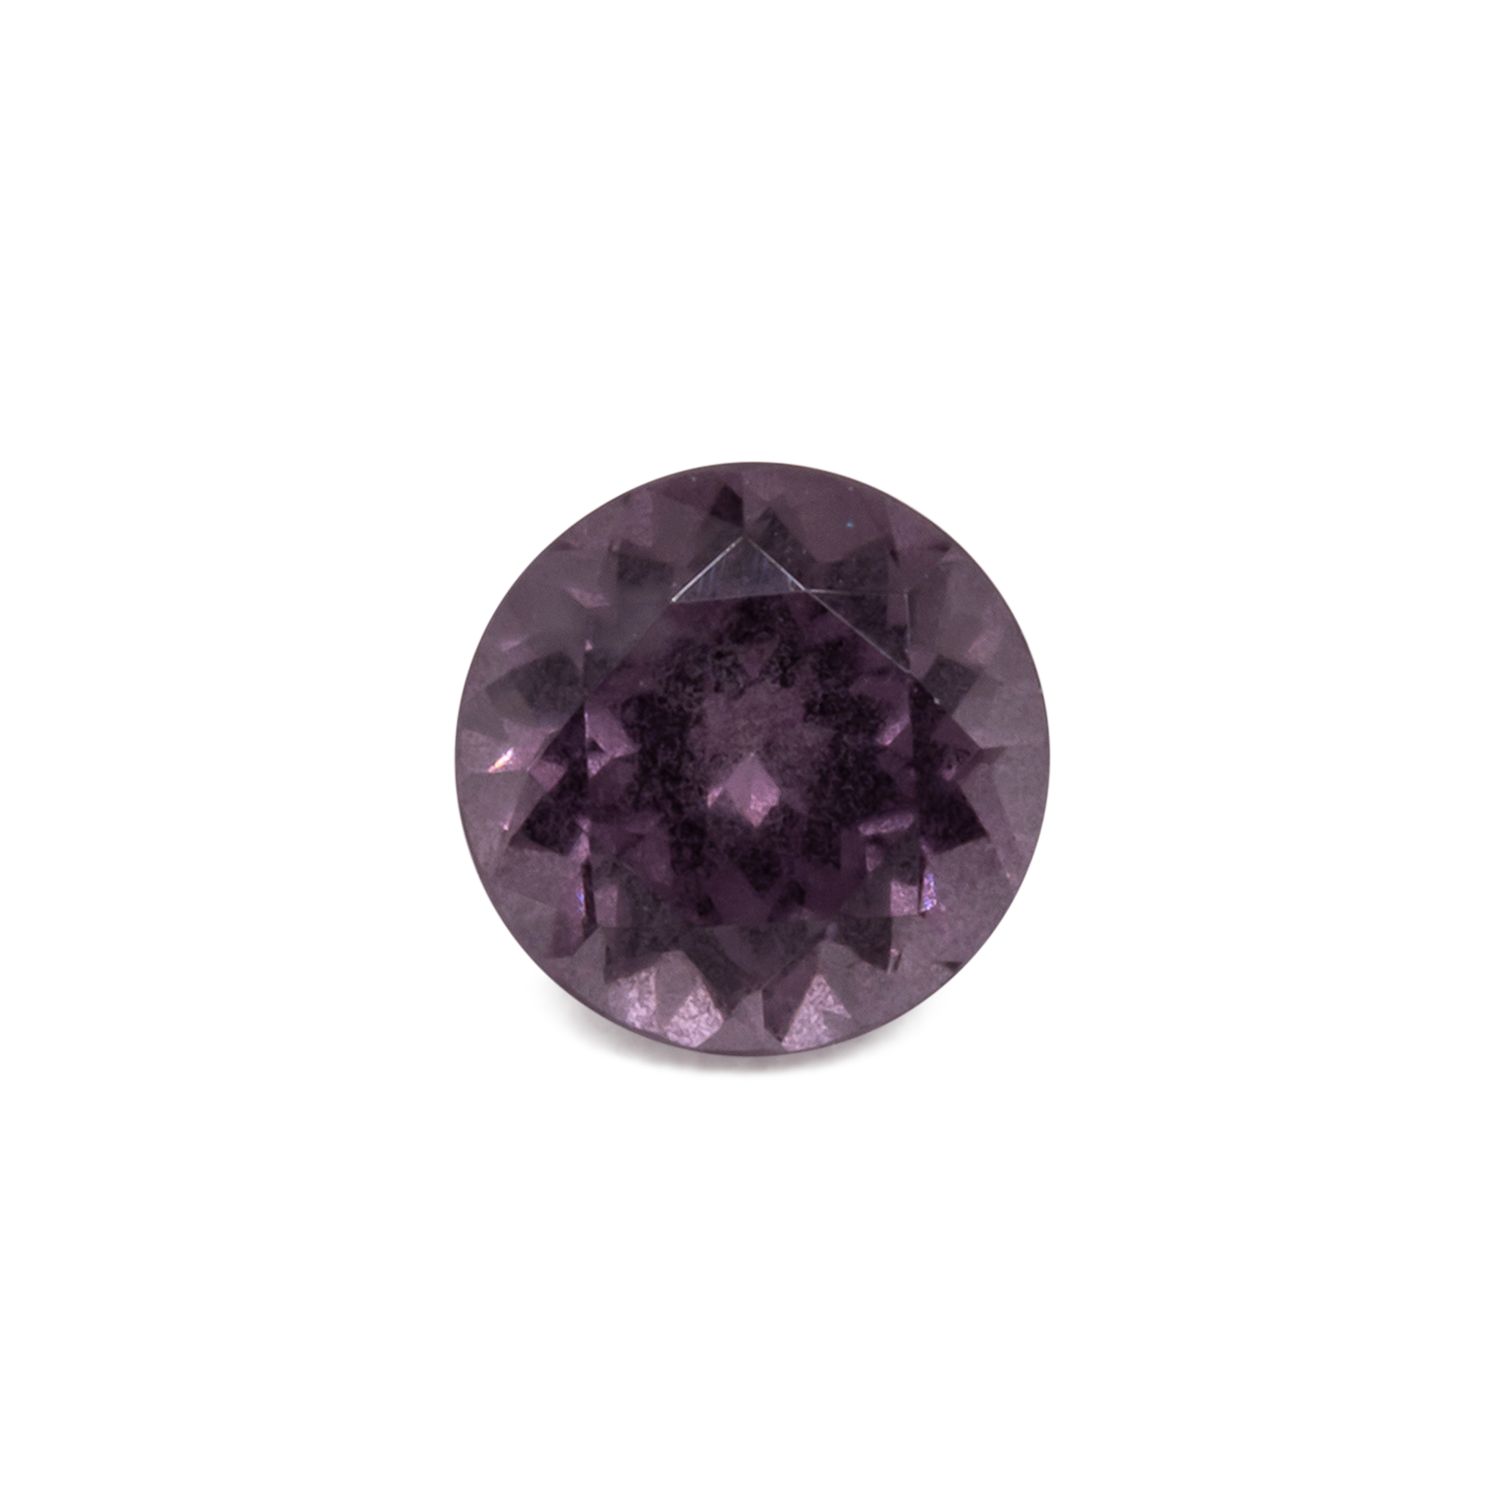 Spinel - purple, round, 5.1x5.1 mm, 0.58 cts, No. SP90017